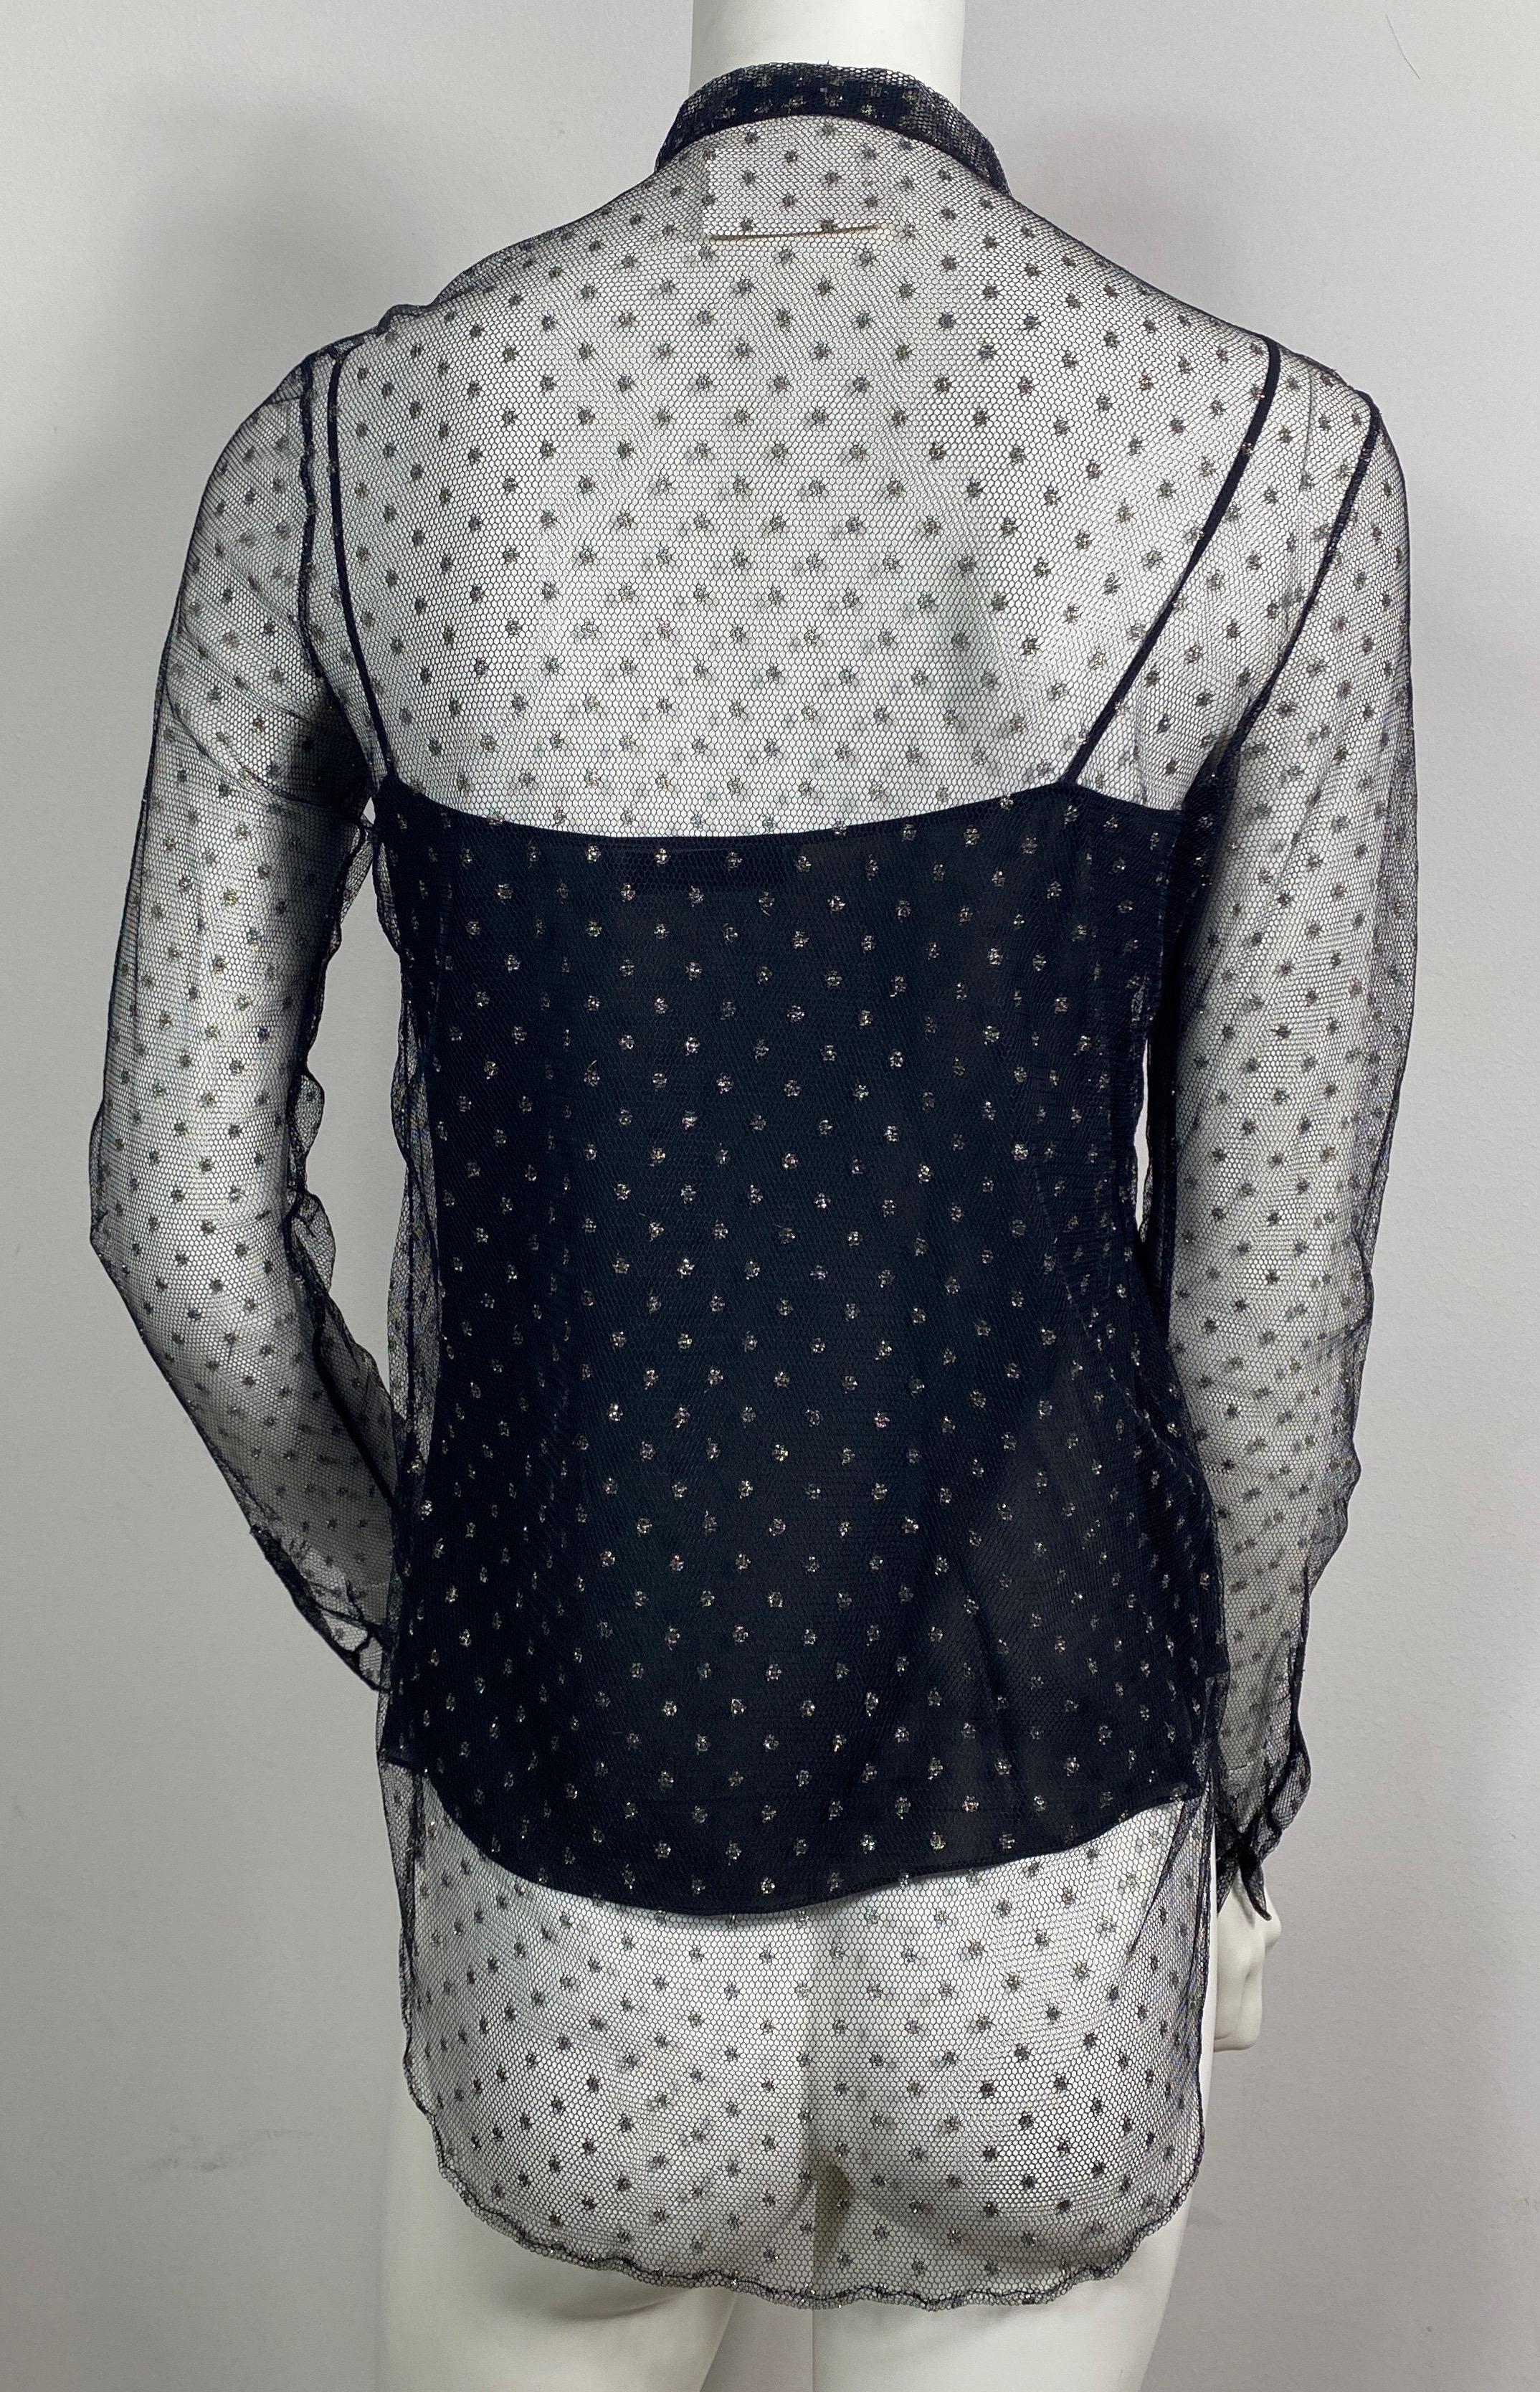 Christian Dior Mini Polka Dot Sheer Mesh Top noir et or - Taille petite en vente 7